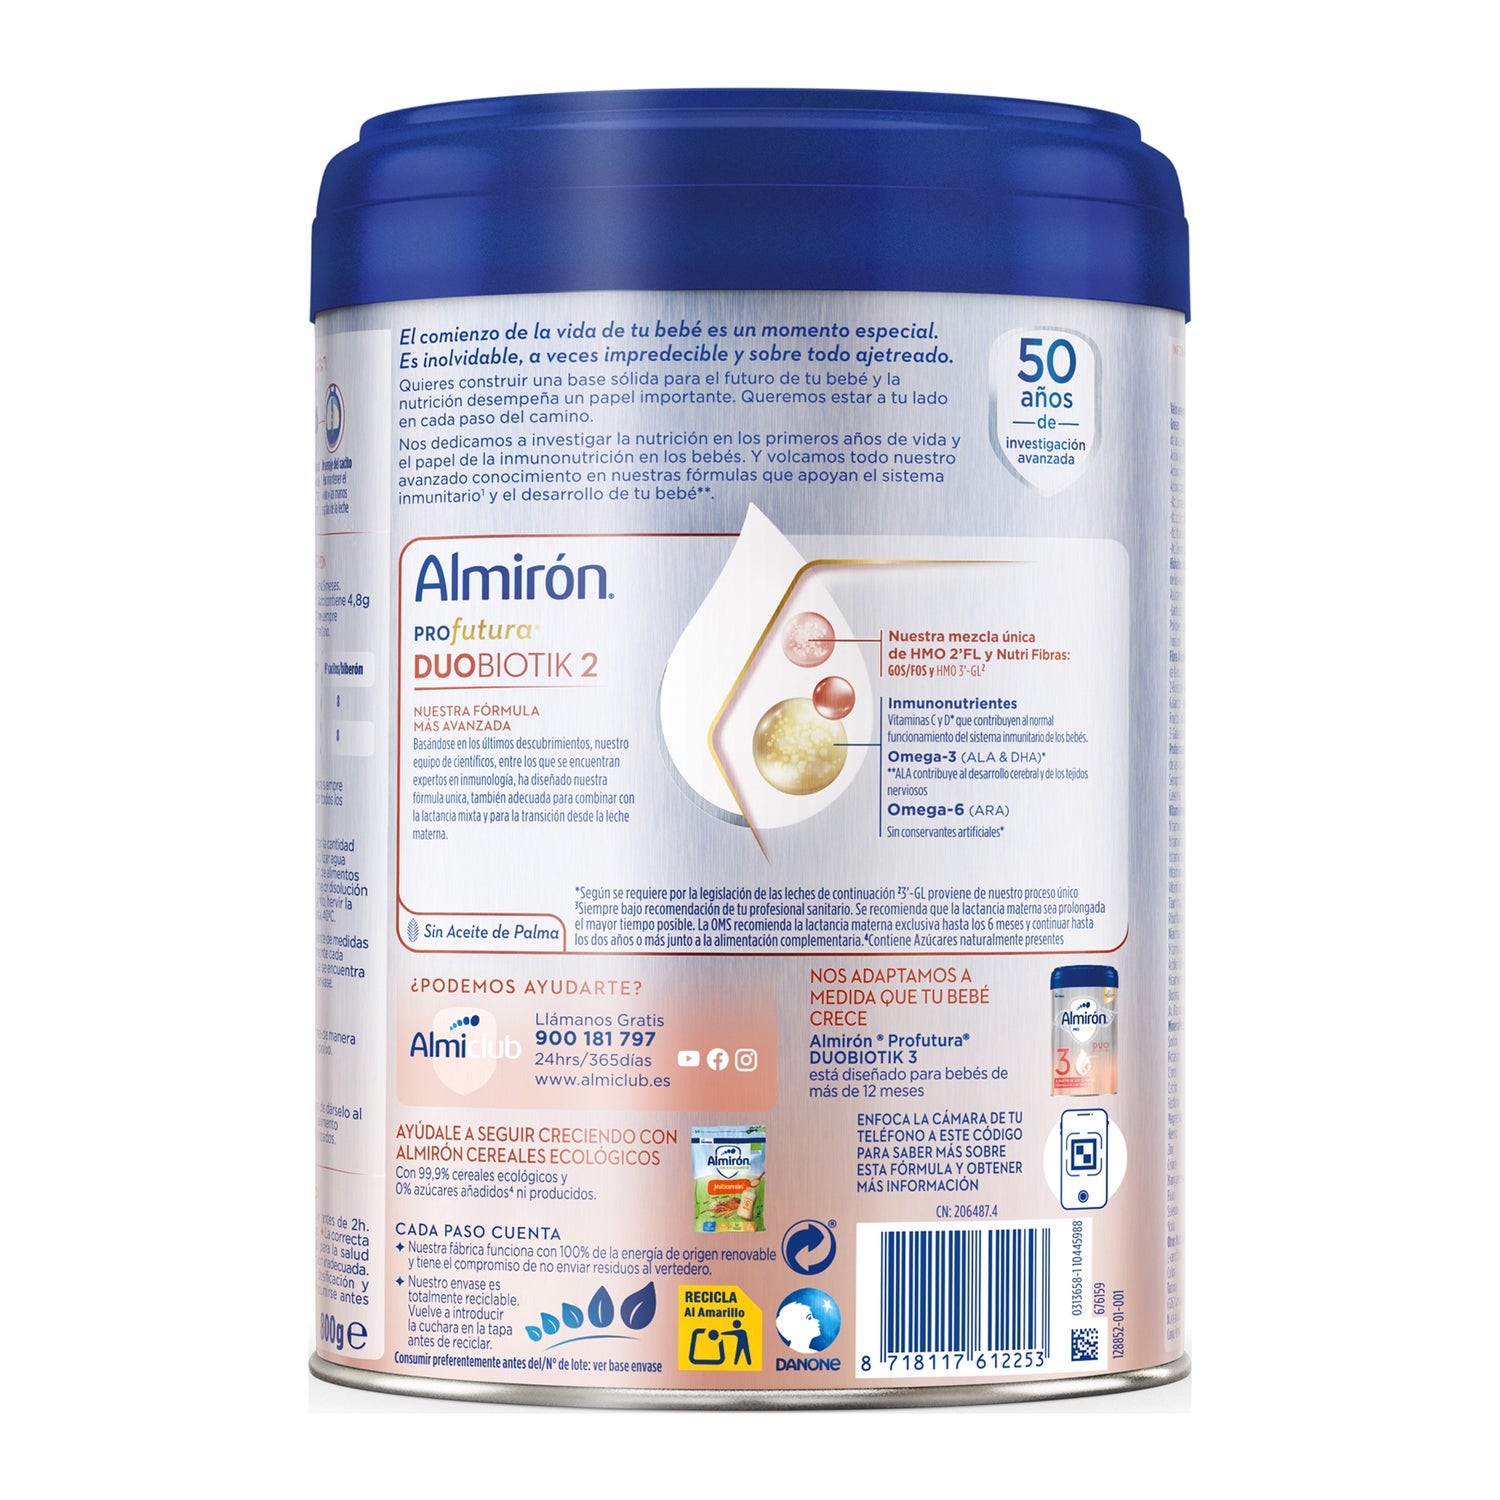 Buy Almiron Profutura+ 2 Powder 800 G. Deals on Almiron brand. Buy Now!!